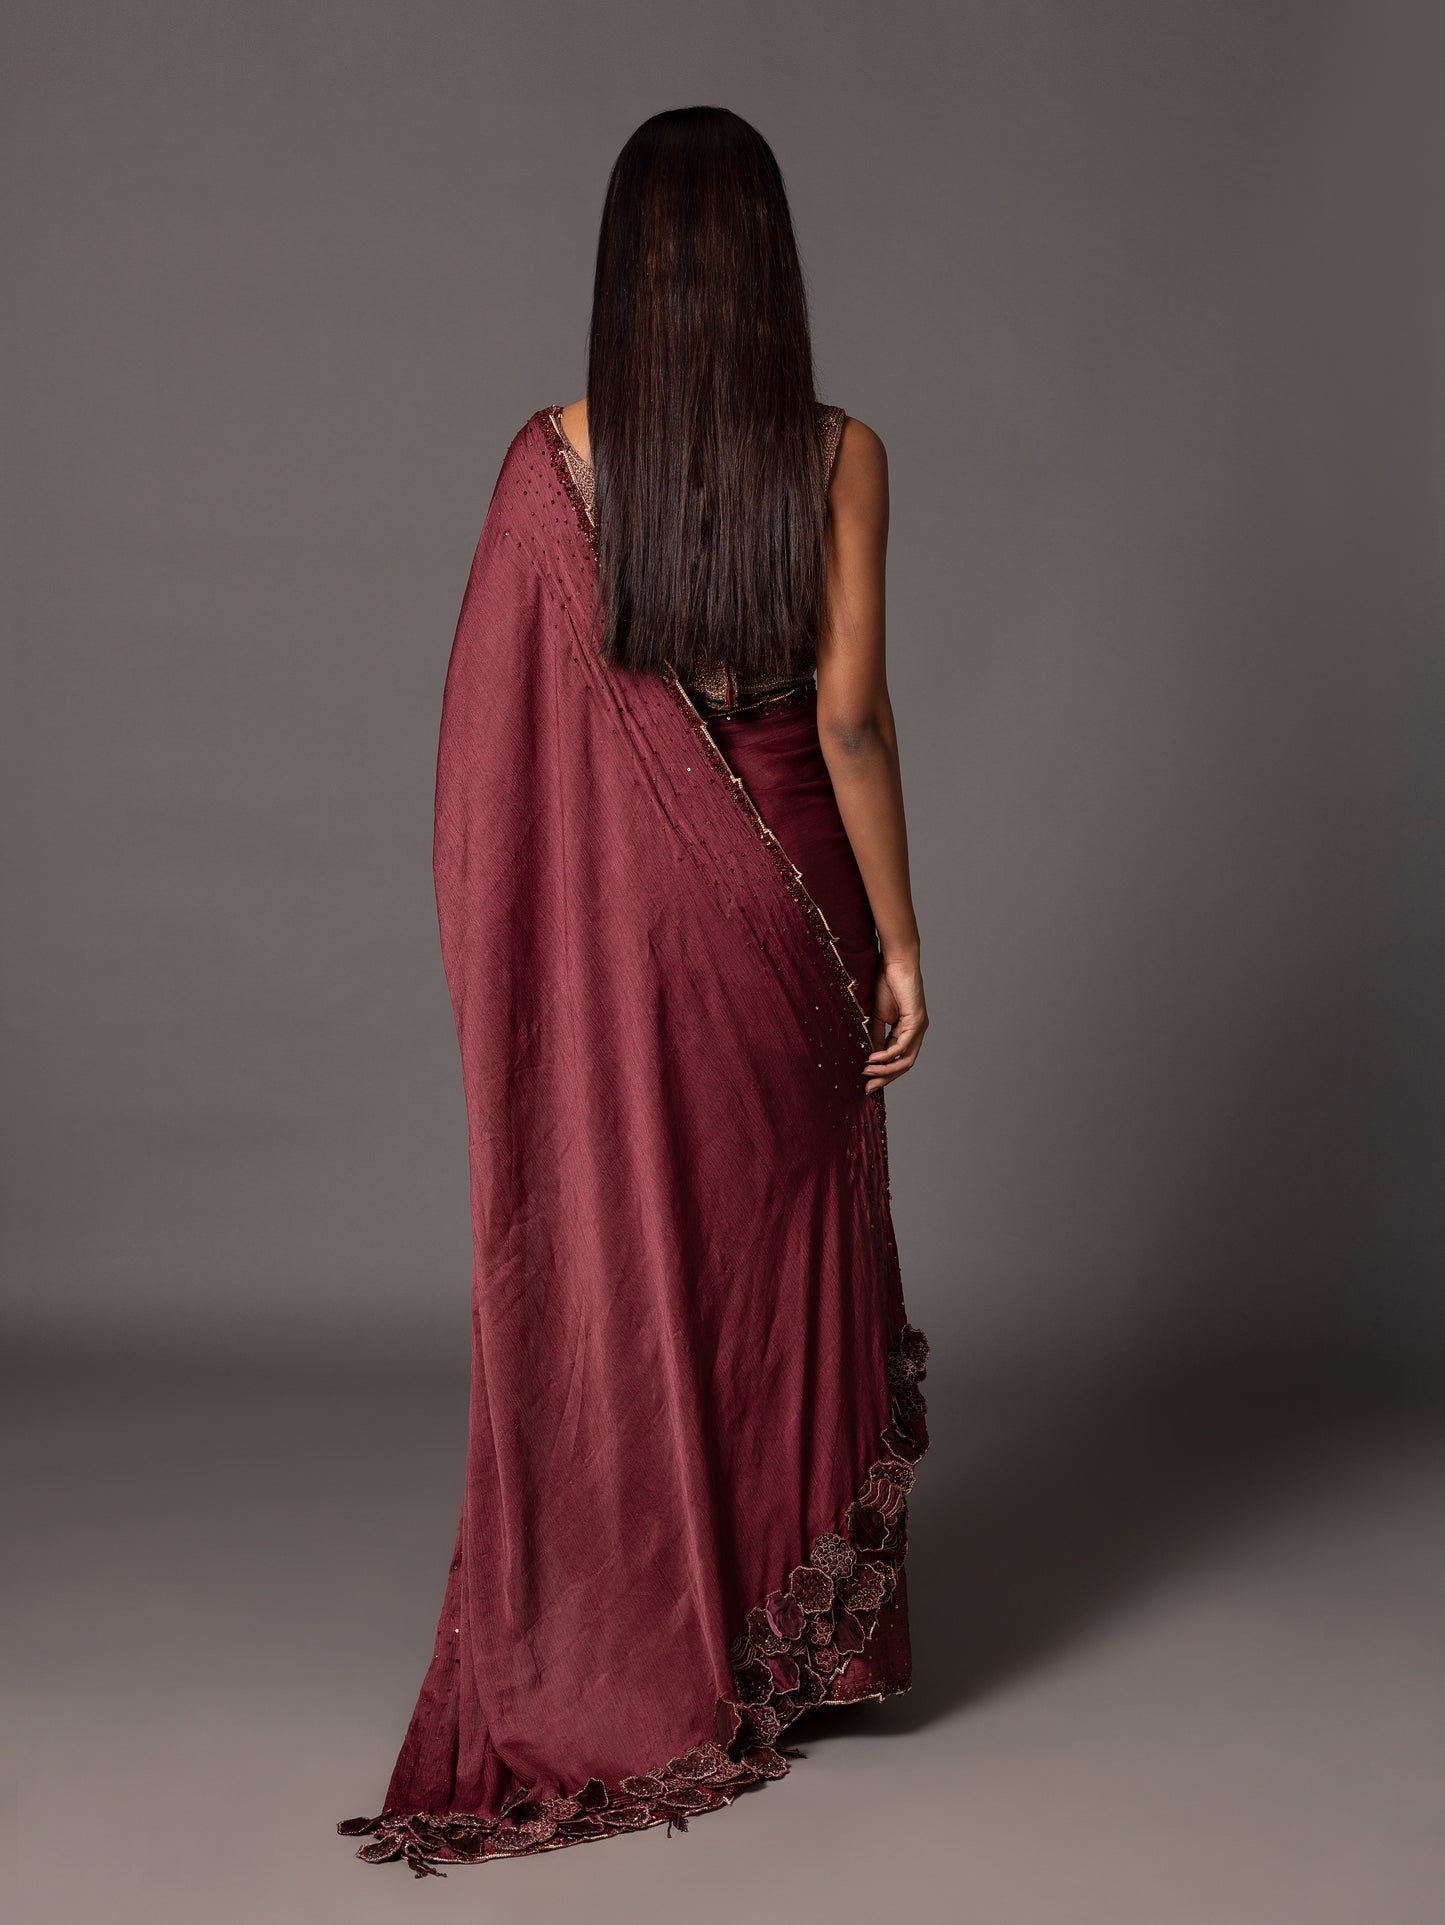 Namib Maroon beaded Sari